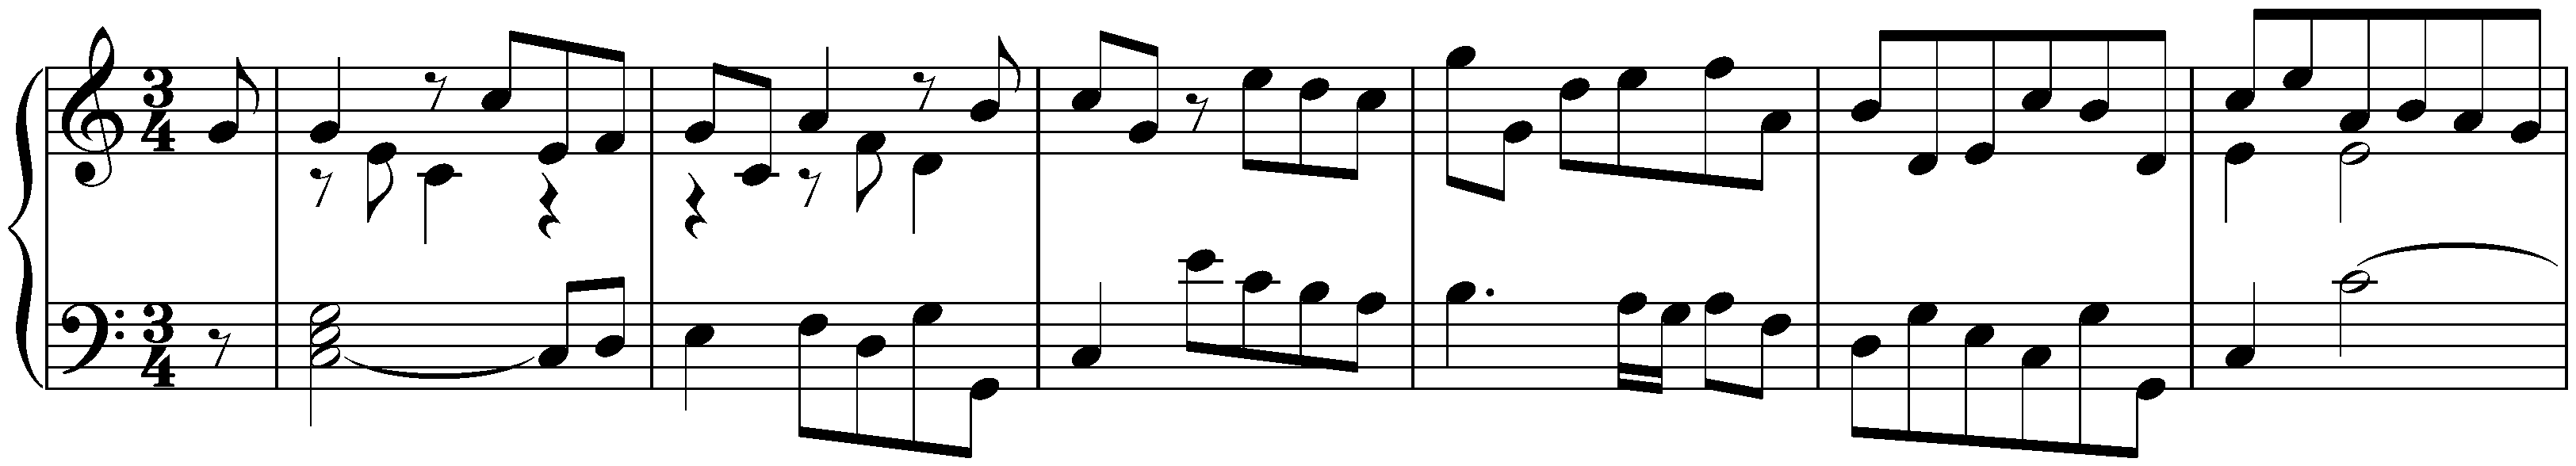 Suite in C major, HWV 443; 3. Courante